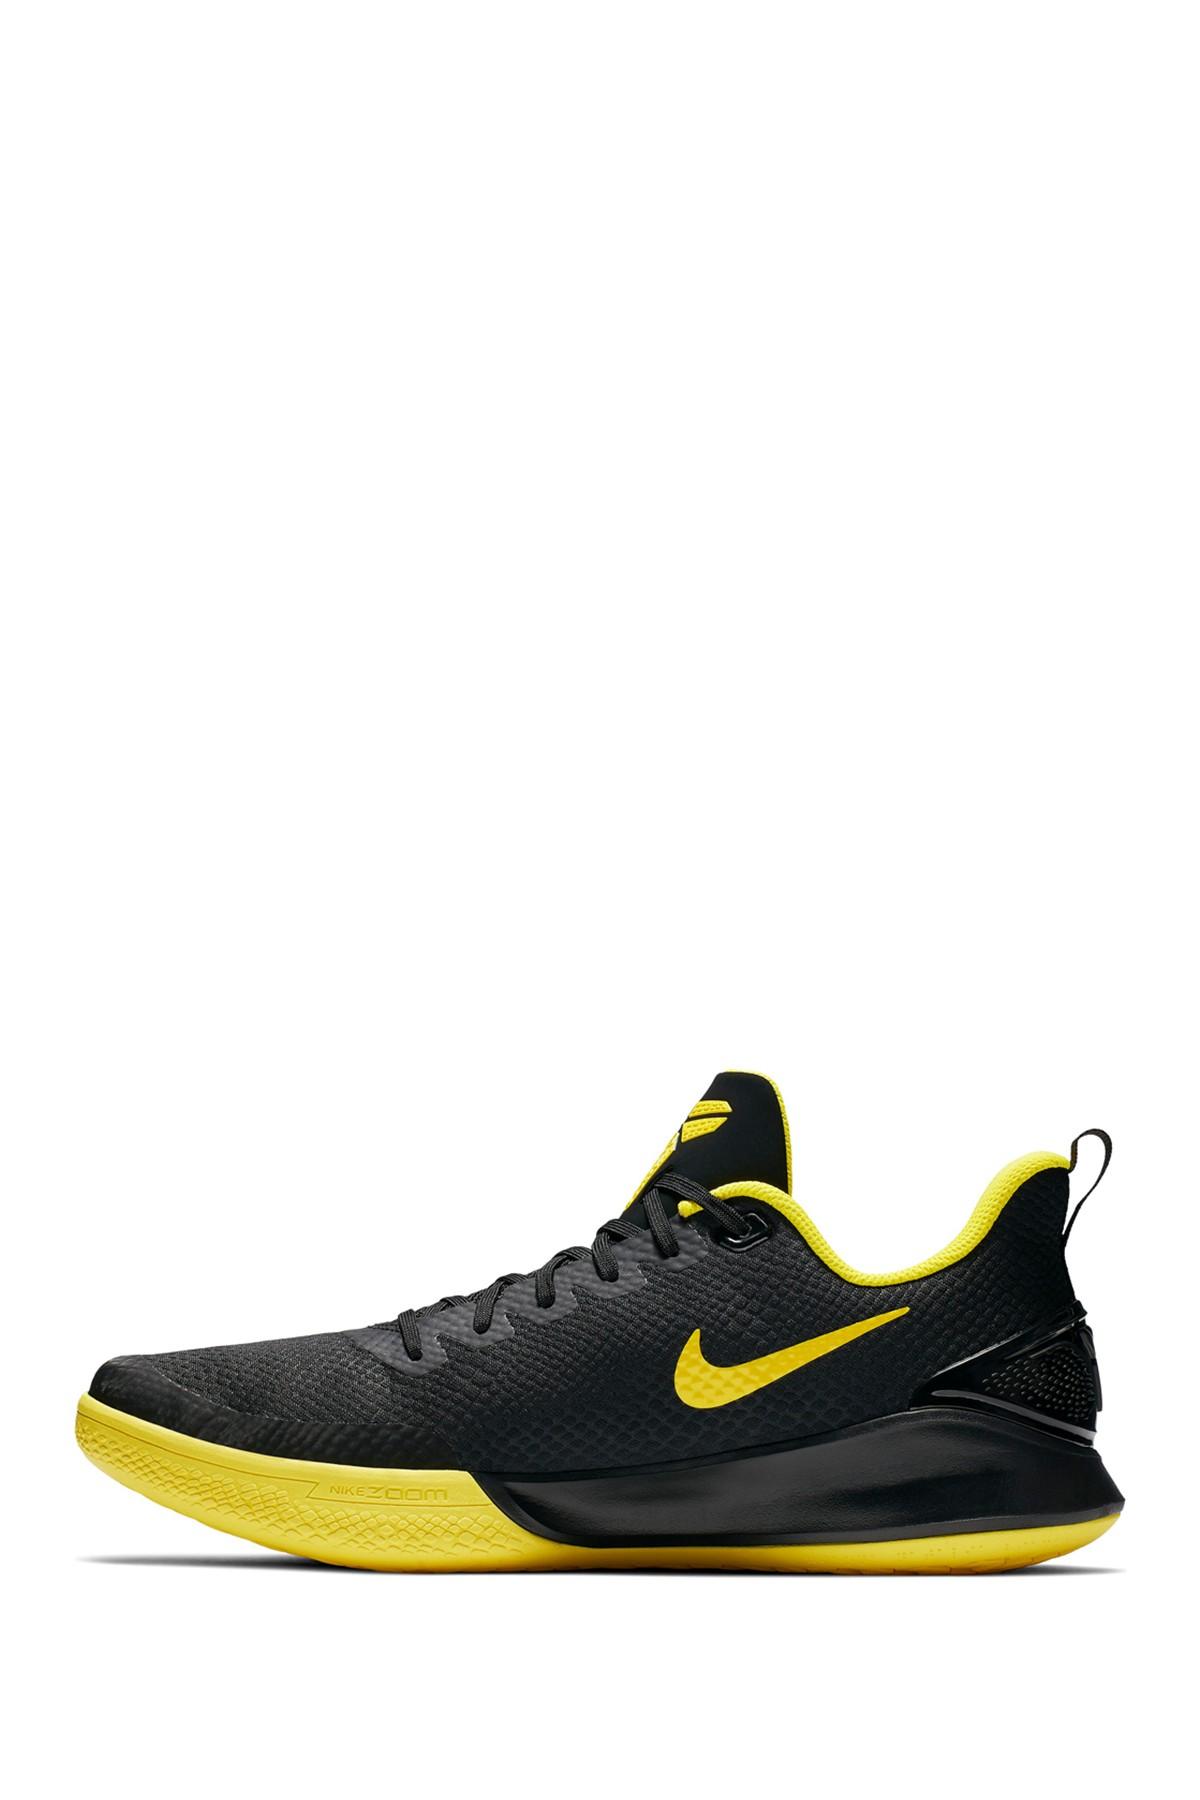 Nike Kobe Mamba Focus Basketball Shoes in Black/Yellow (Black) for Men ...